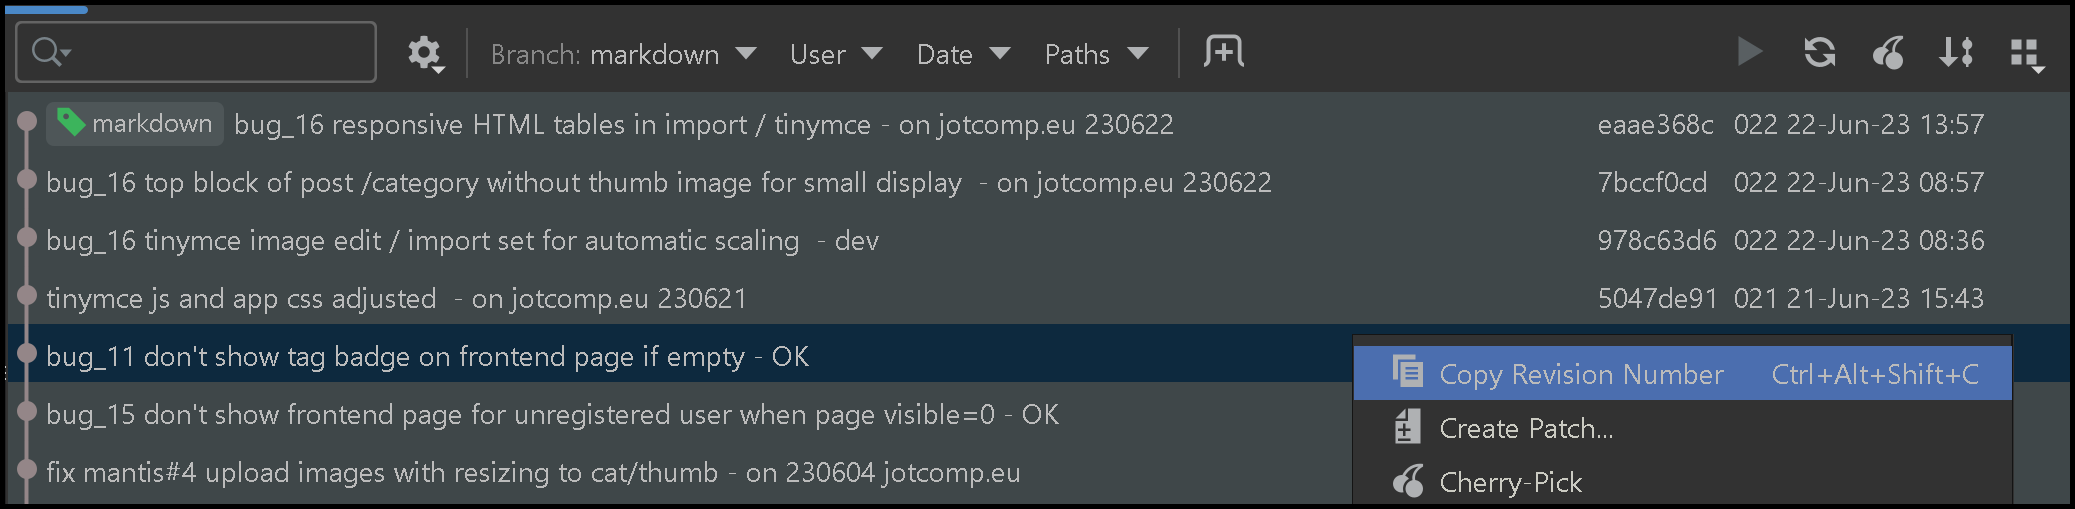 JotComponents KB image